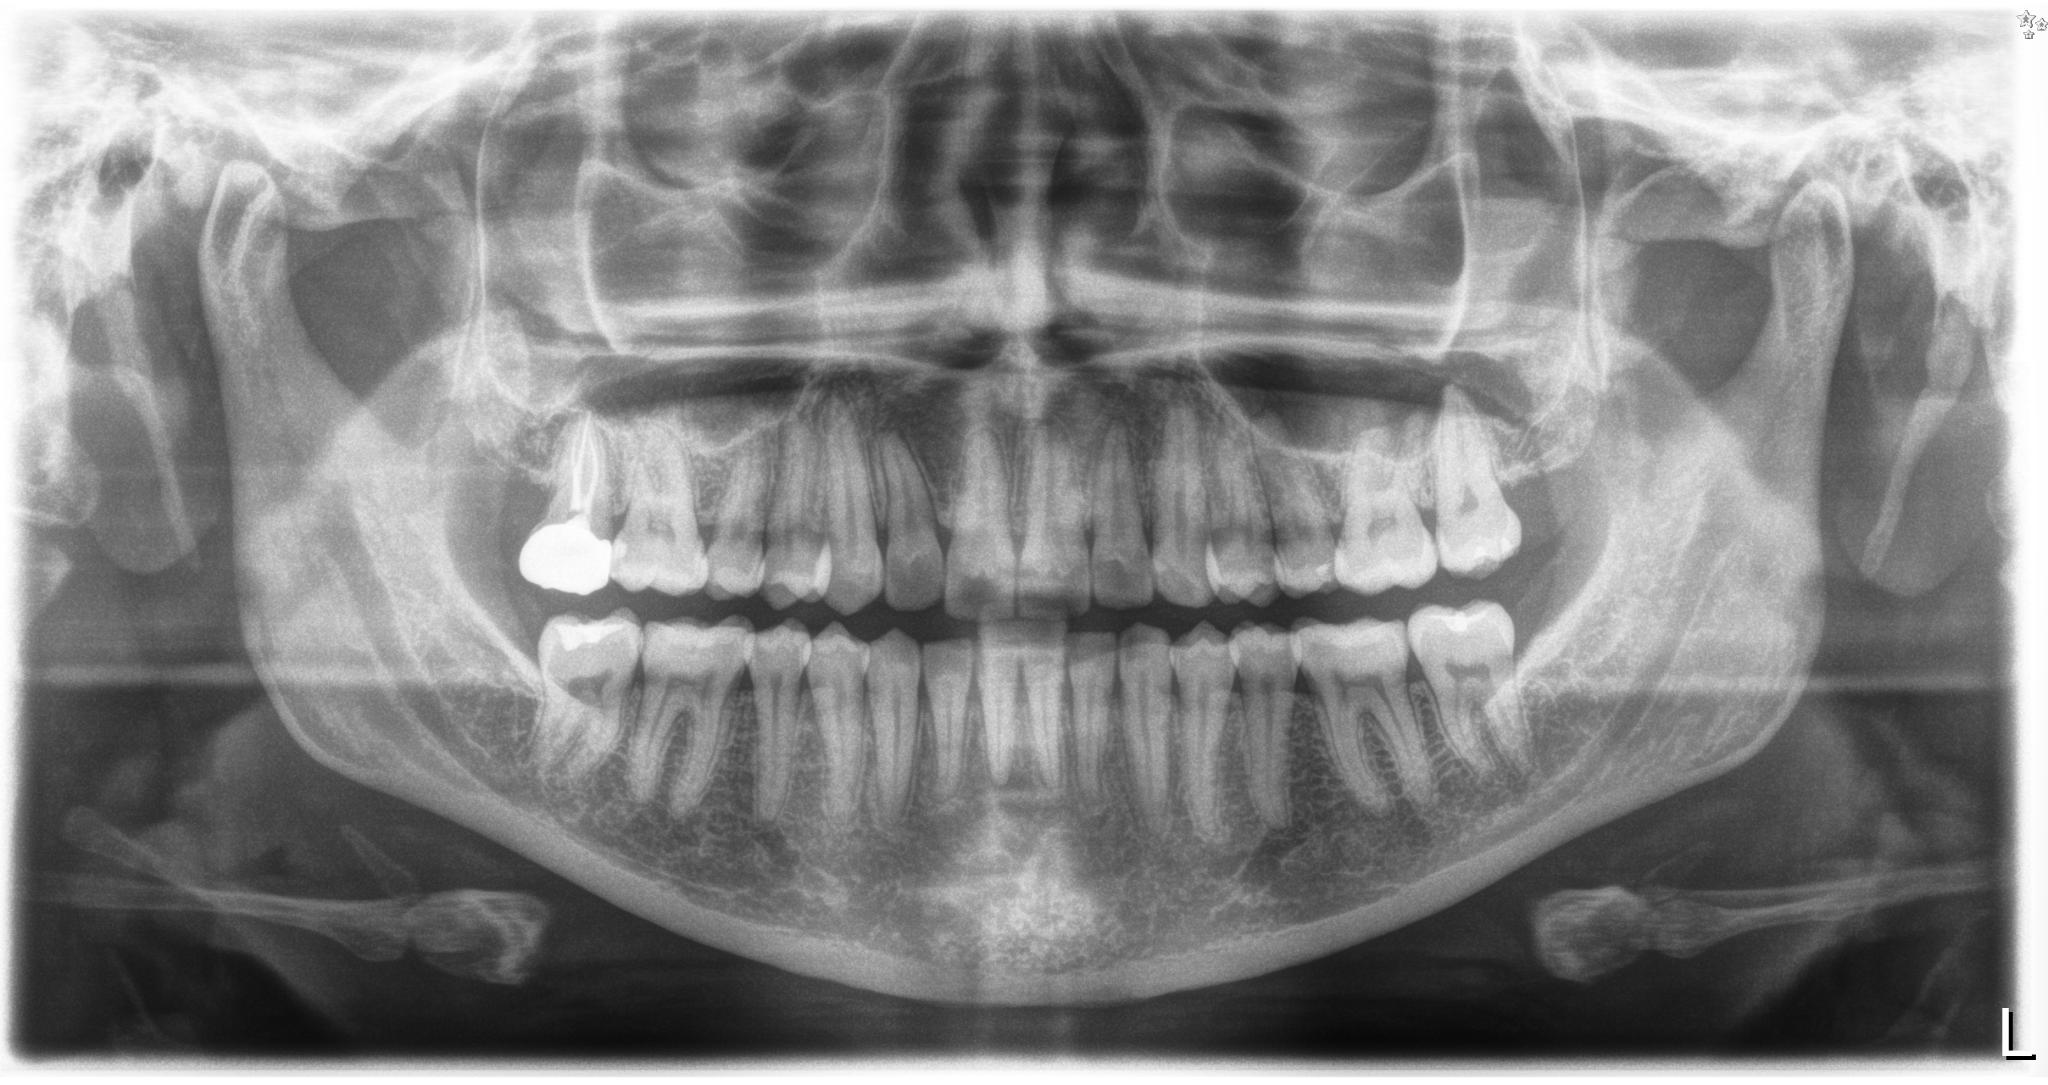 Dental X-rays 